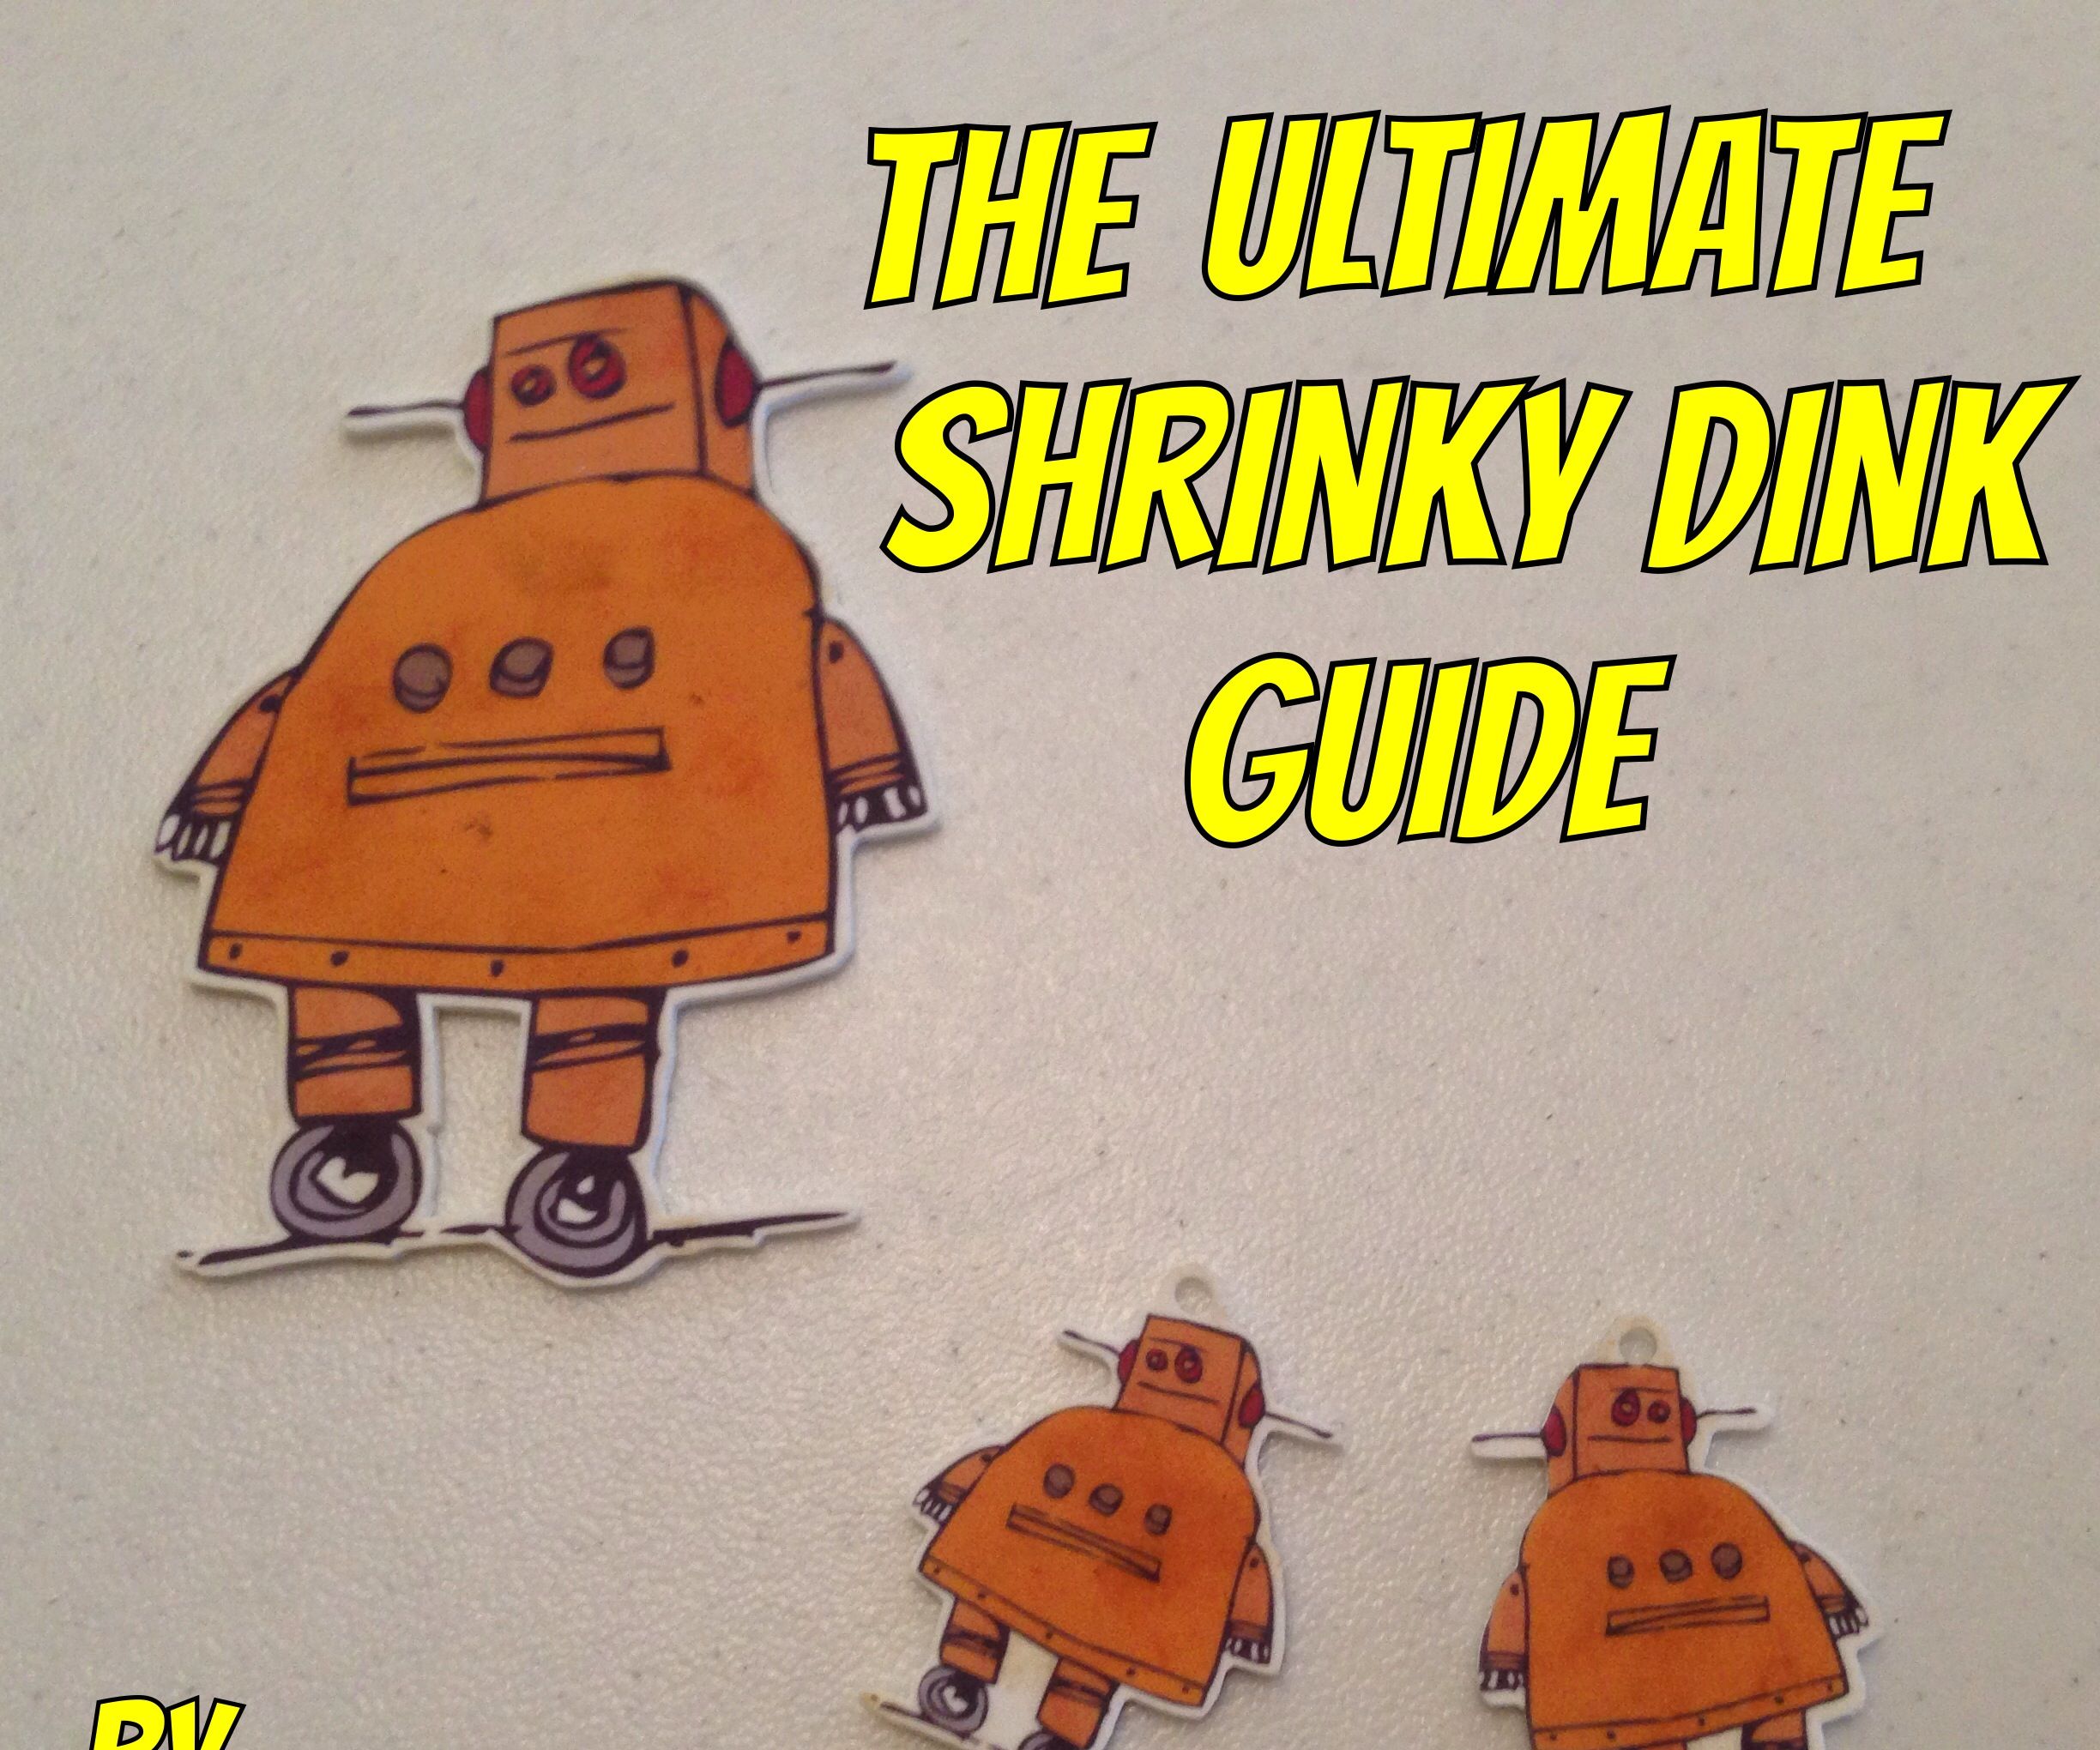 The Ultimate Shrinky Dink Guide - InkJet Version